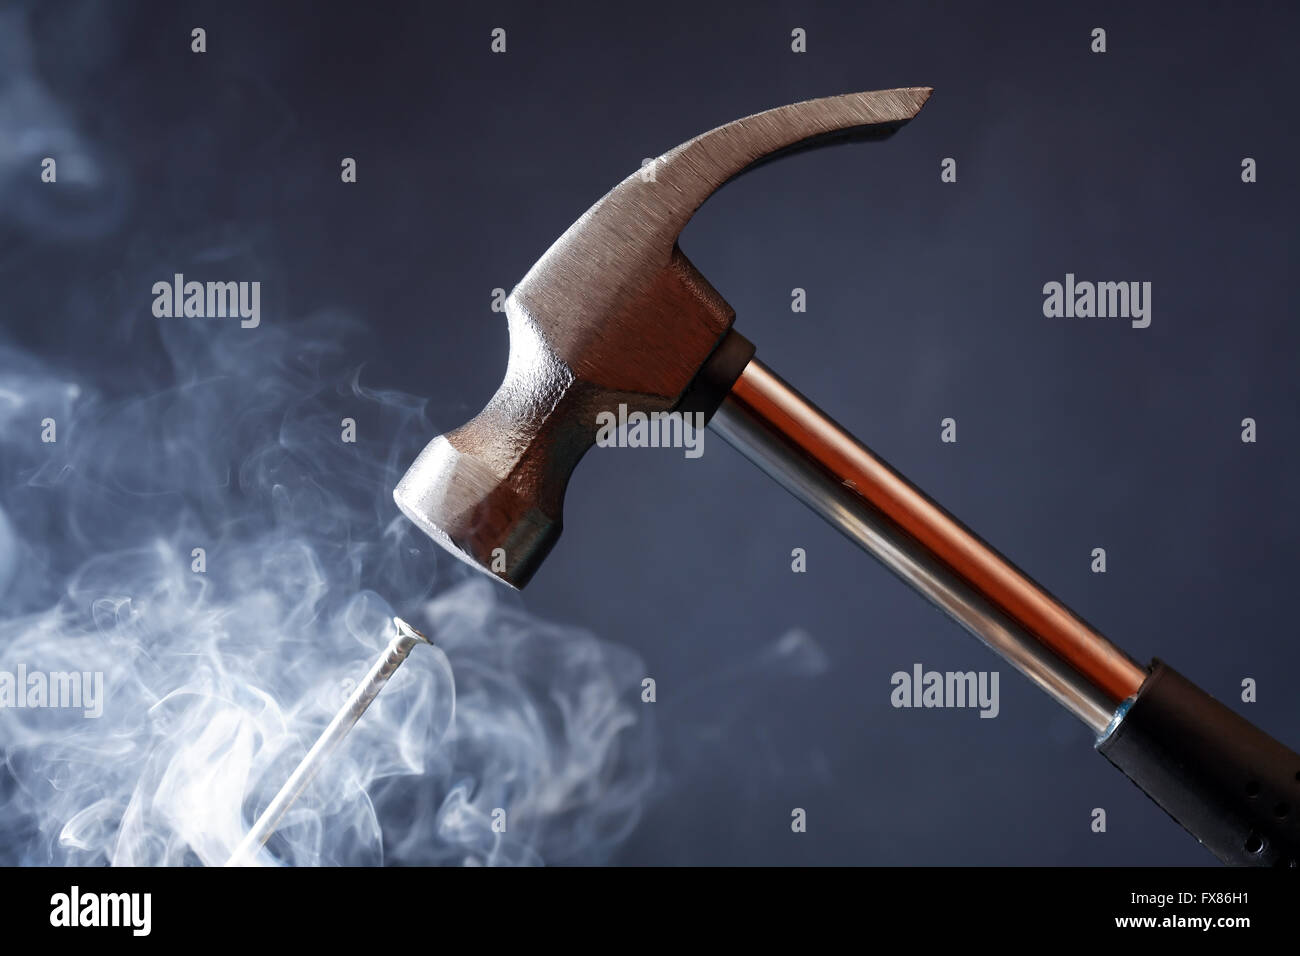 Work tool. Metal hammer above nail with smoke on nice dark background Stock Photo